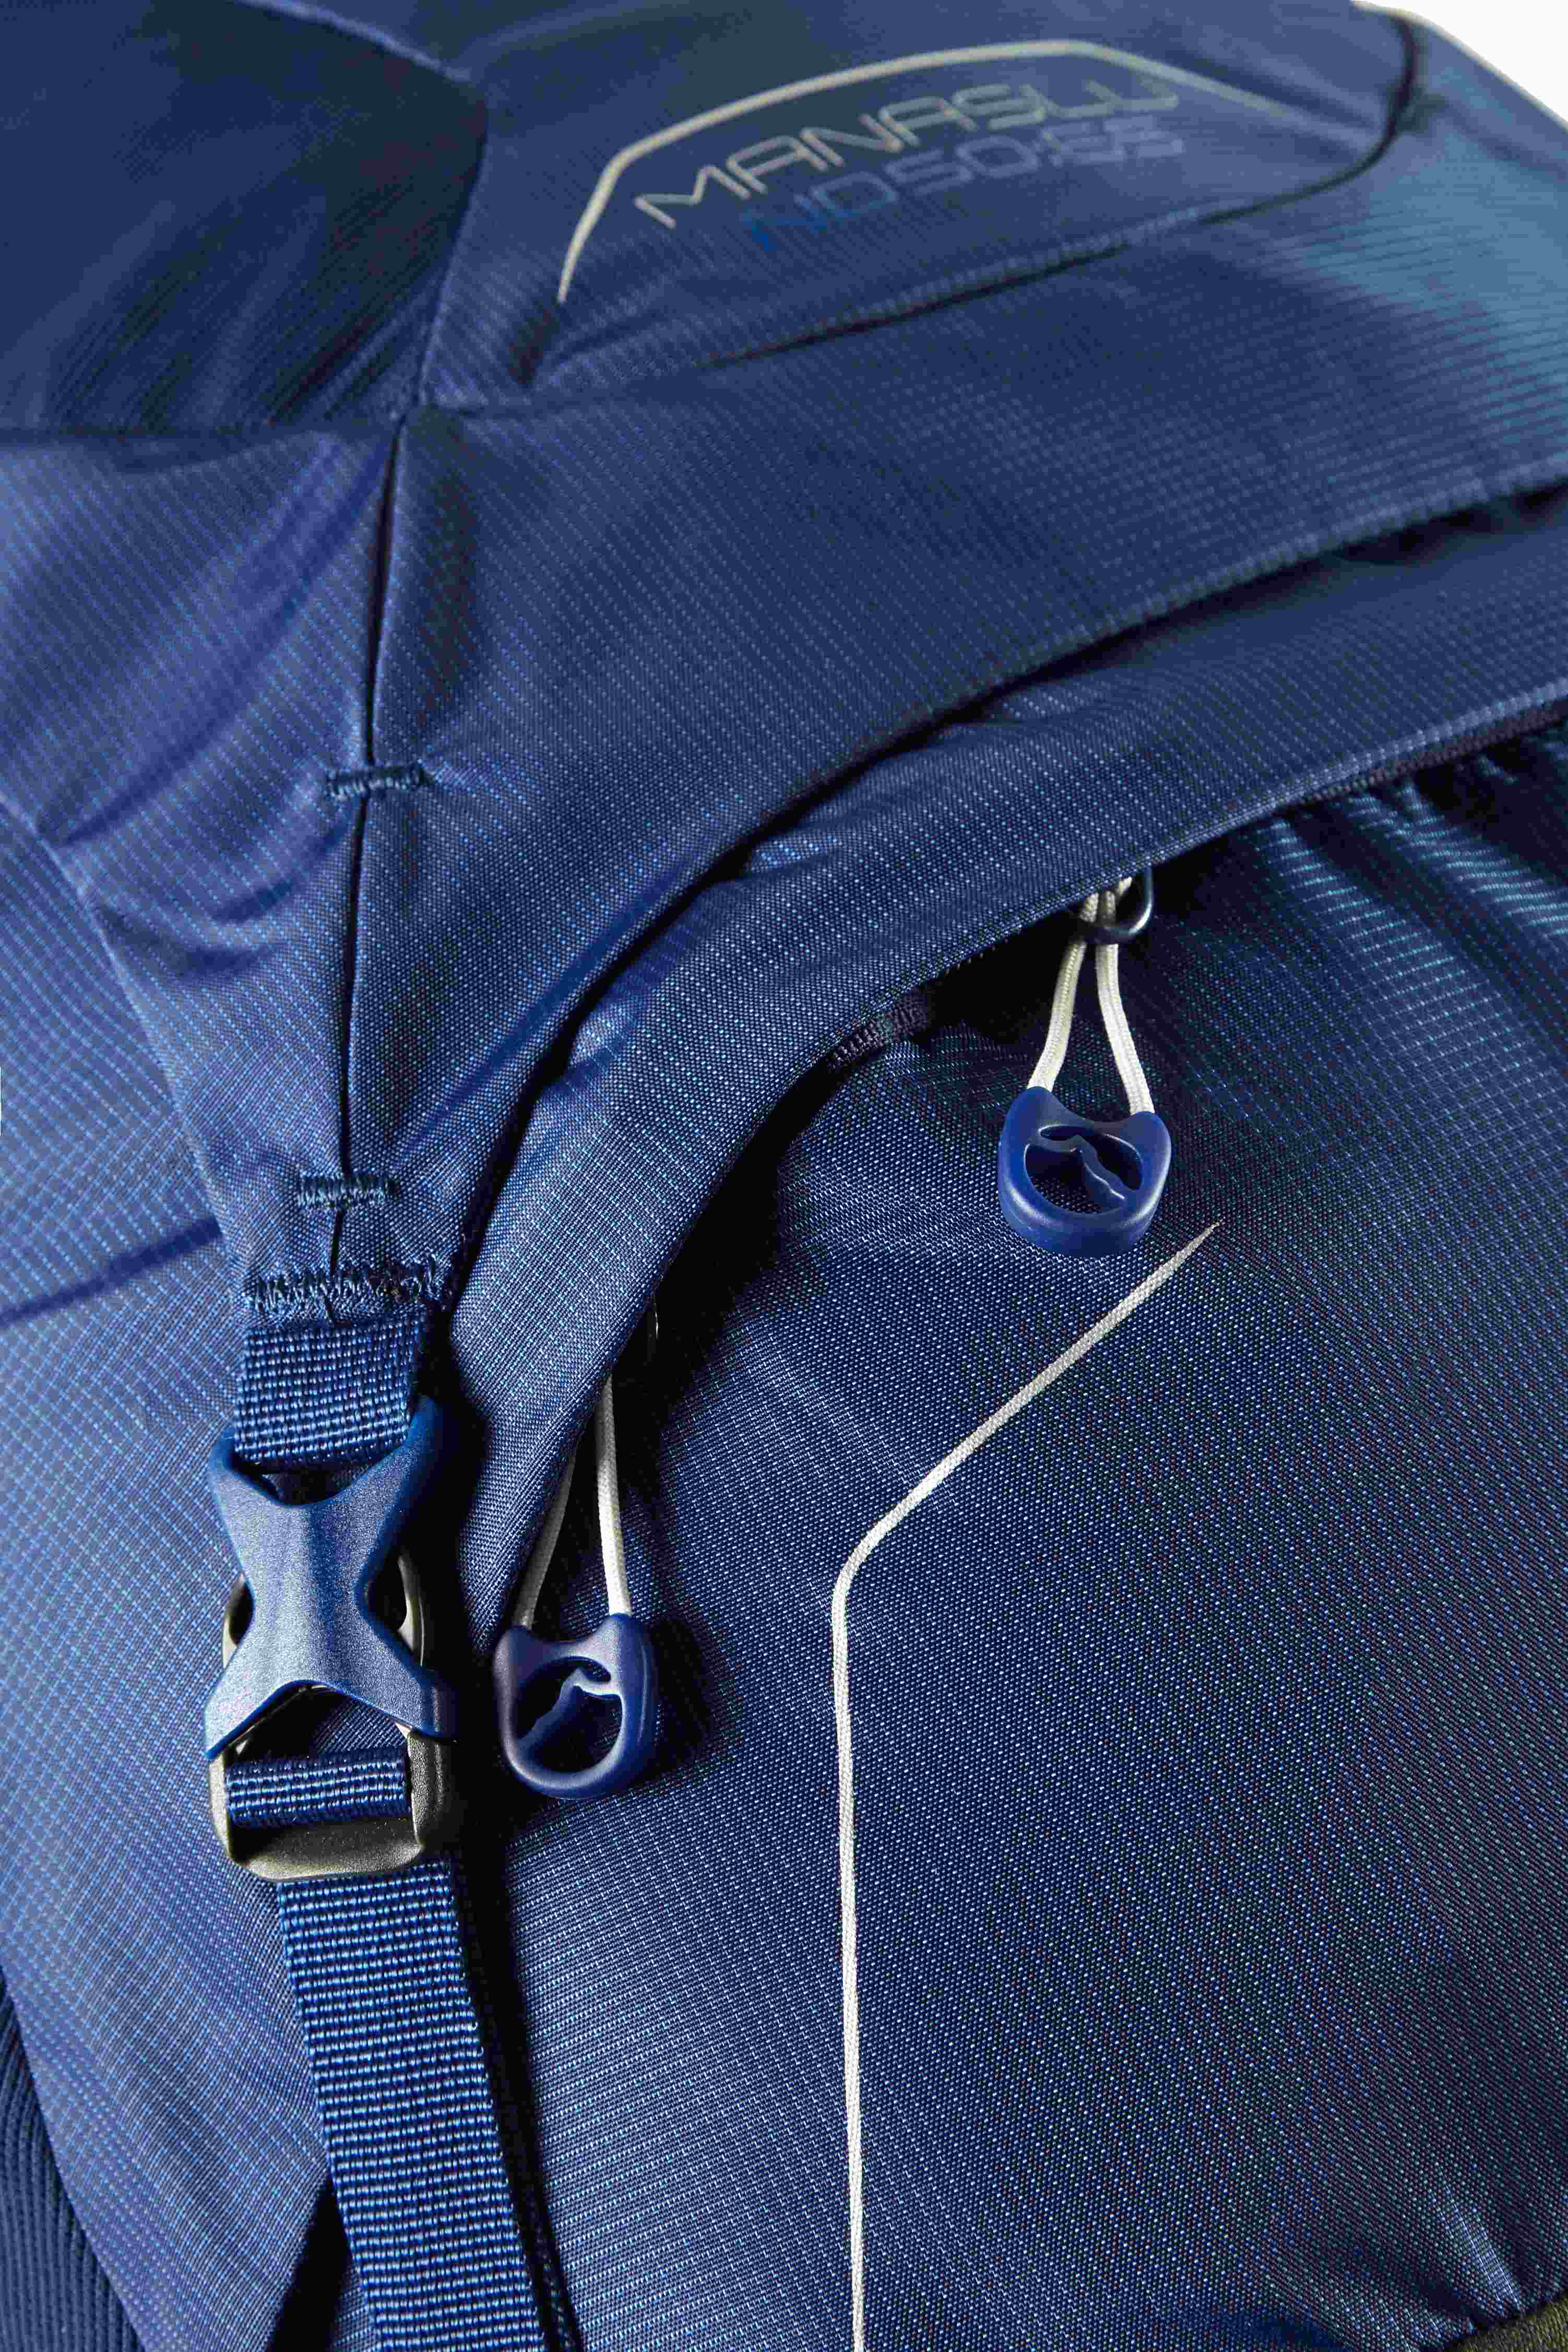 Lowe Alpine Backpack Manaslu Nd50:65 - Blueprint - S-M